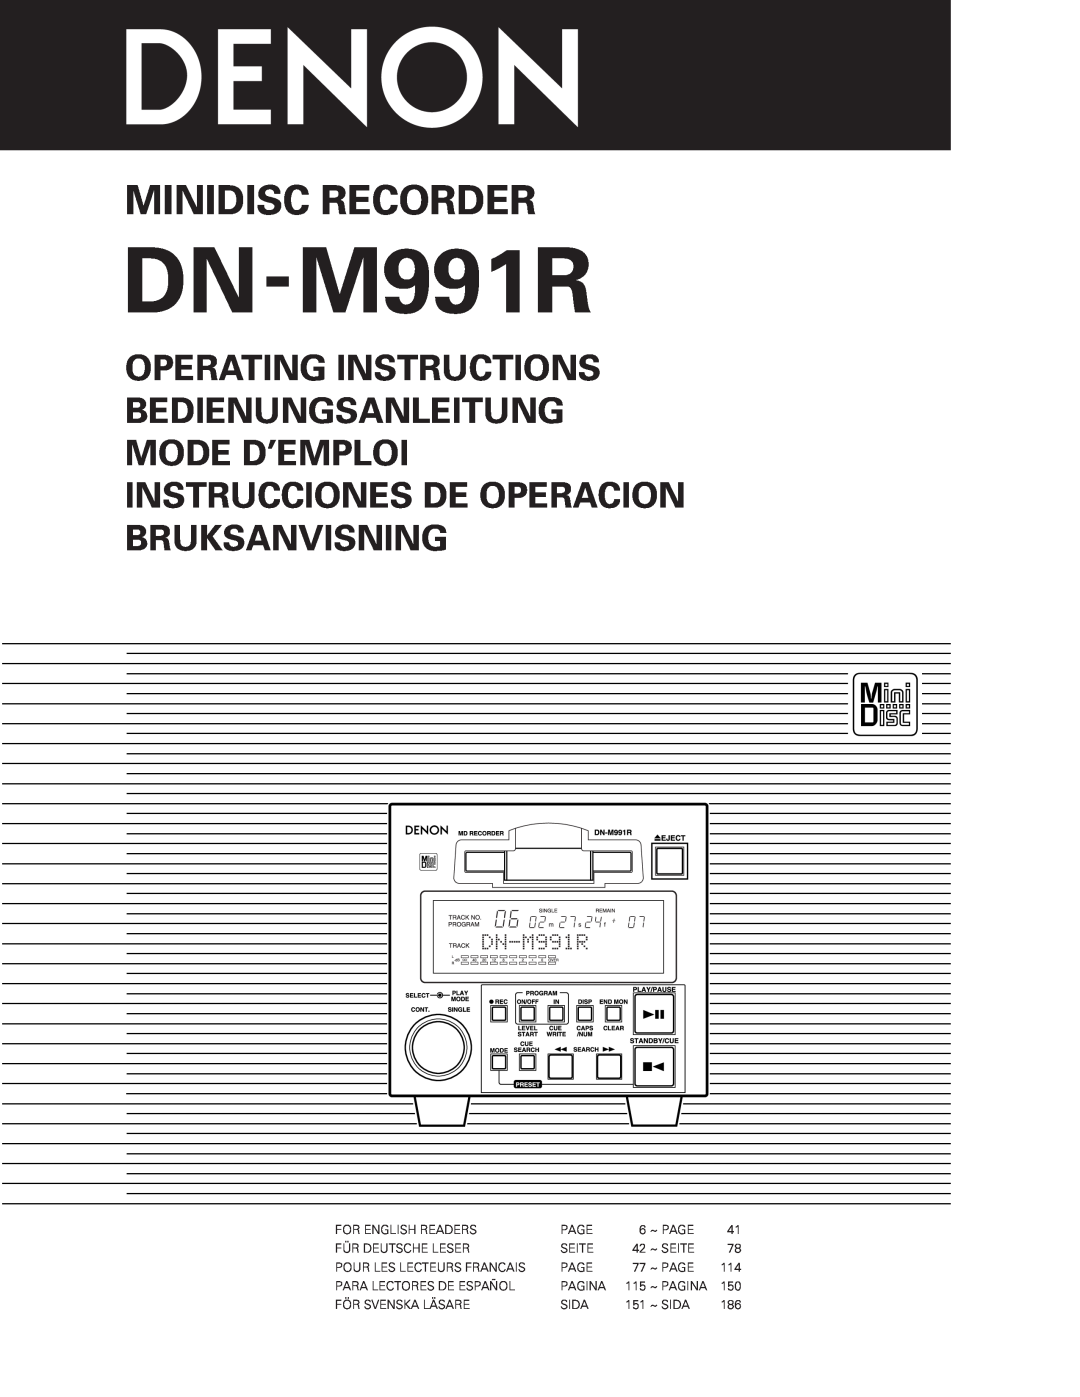 Denon DN-M991R operating instructions Minidisc Recorder 